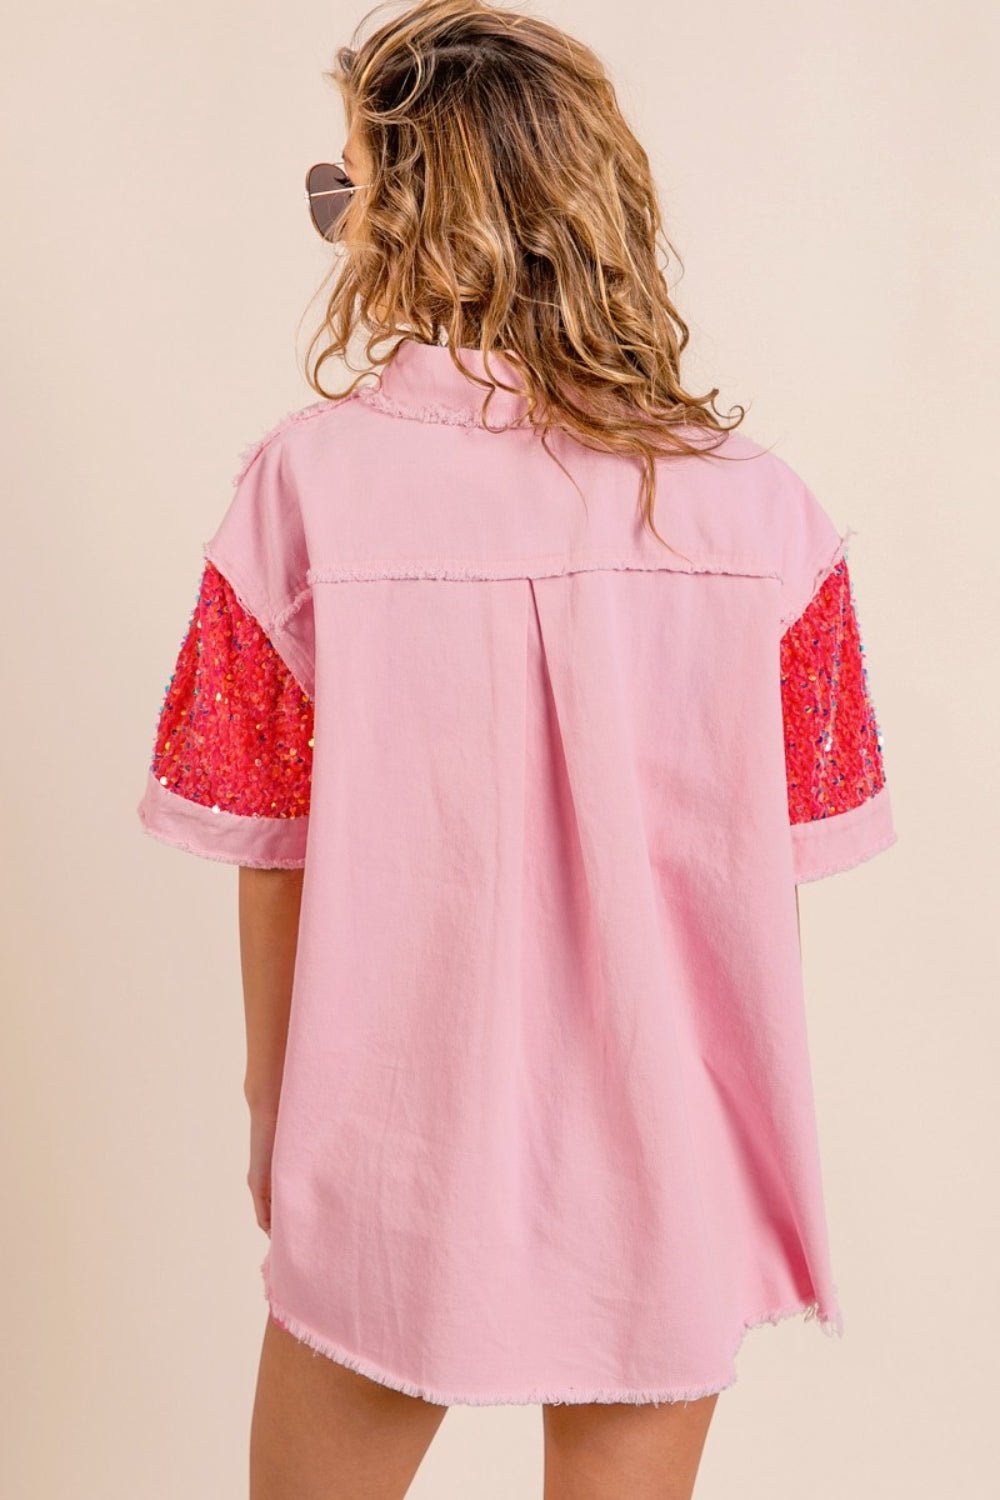 Sequin Detail Raw Hem Short Sleeve Shirt in Pink FuchsiaShirtBiBi